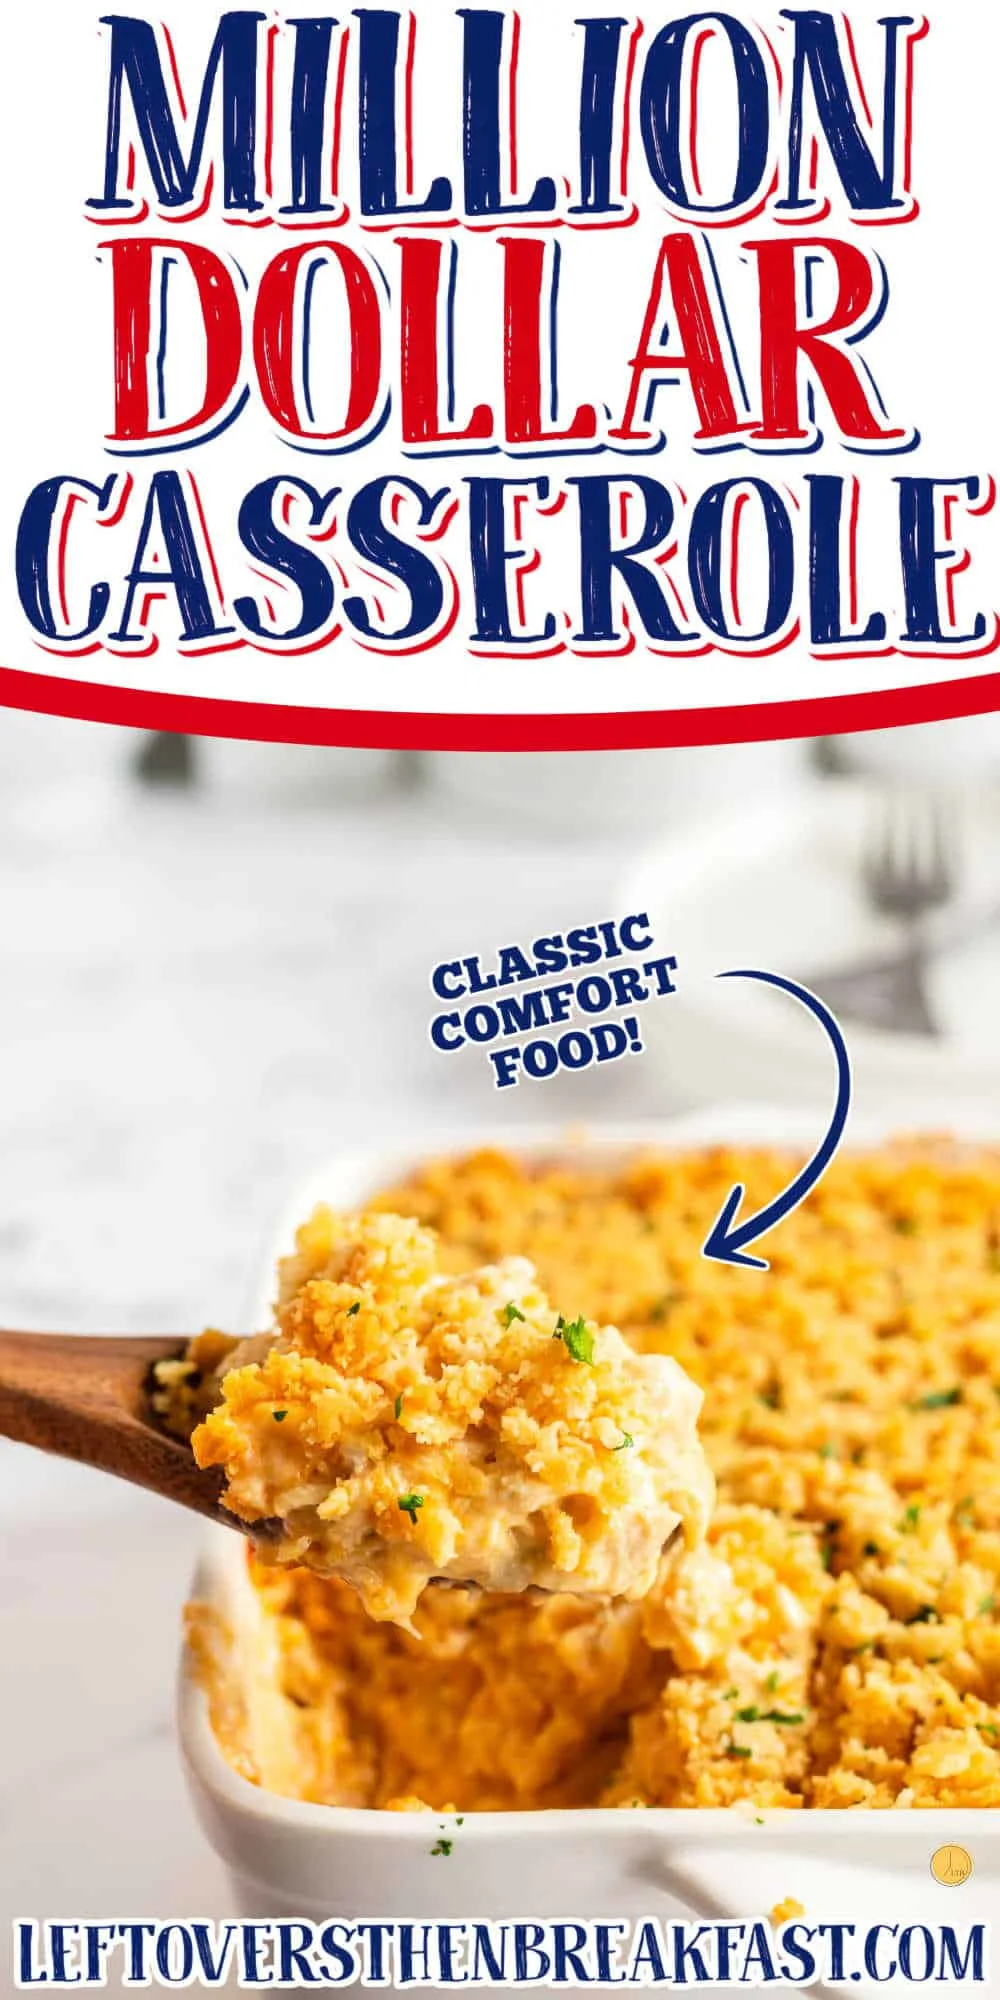 scoop of casserole with text "million dollar chicken casserole"